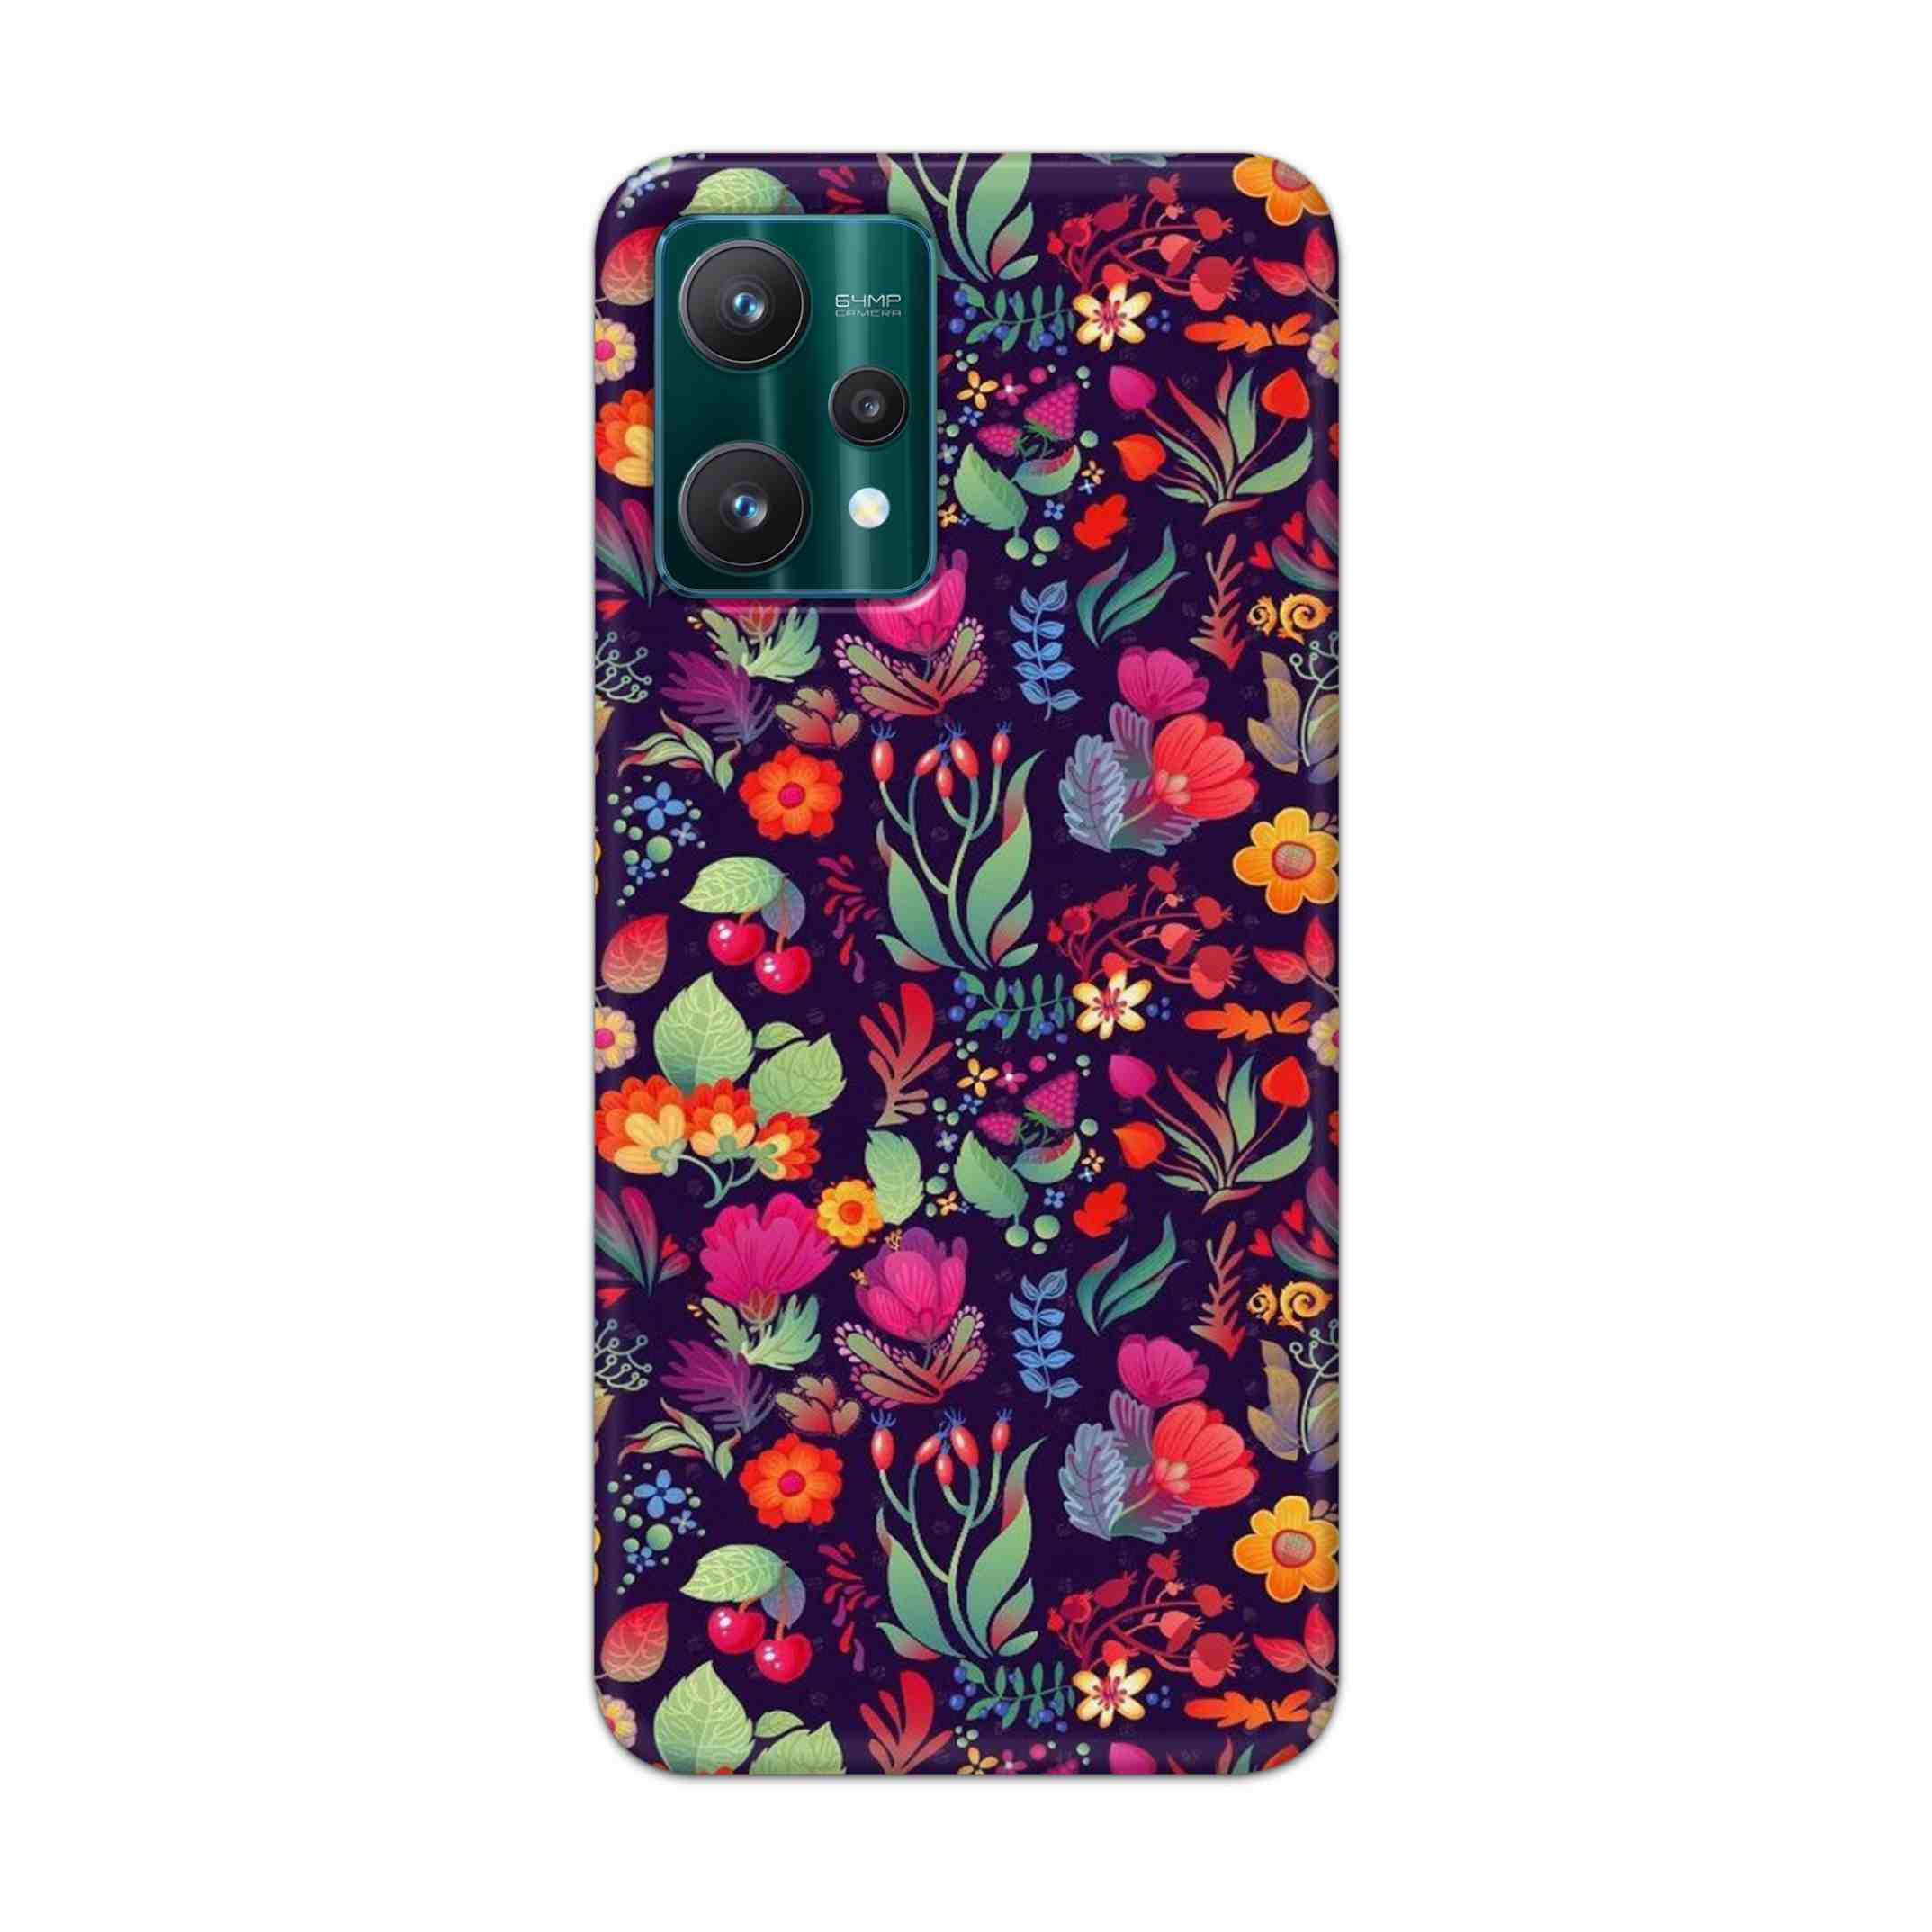 Buy Fruits Flower Hard Back Mobile Phone Case Cover For Realme 9 Pro Online